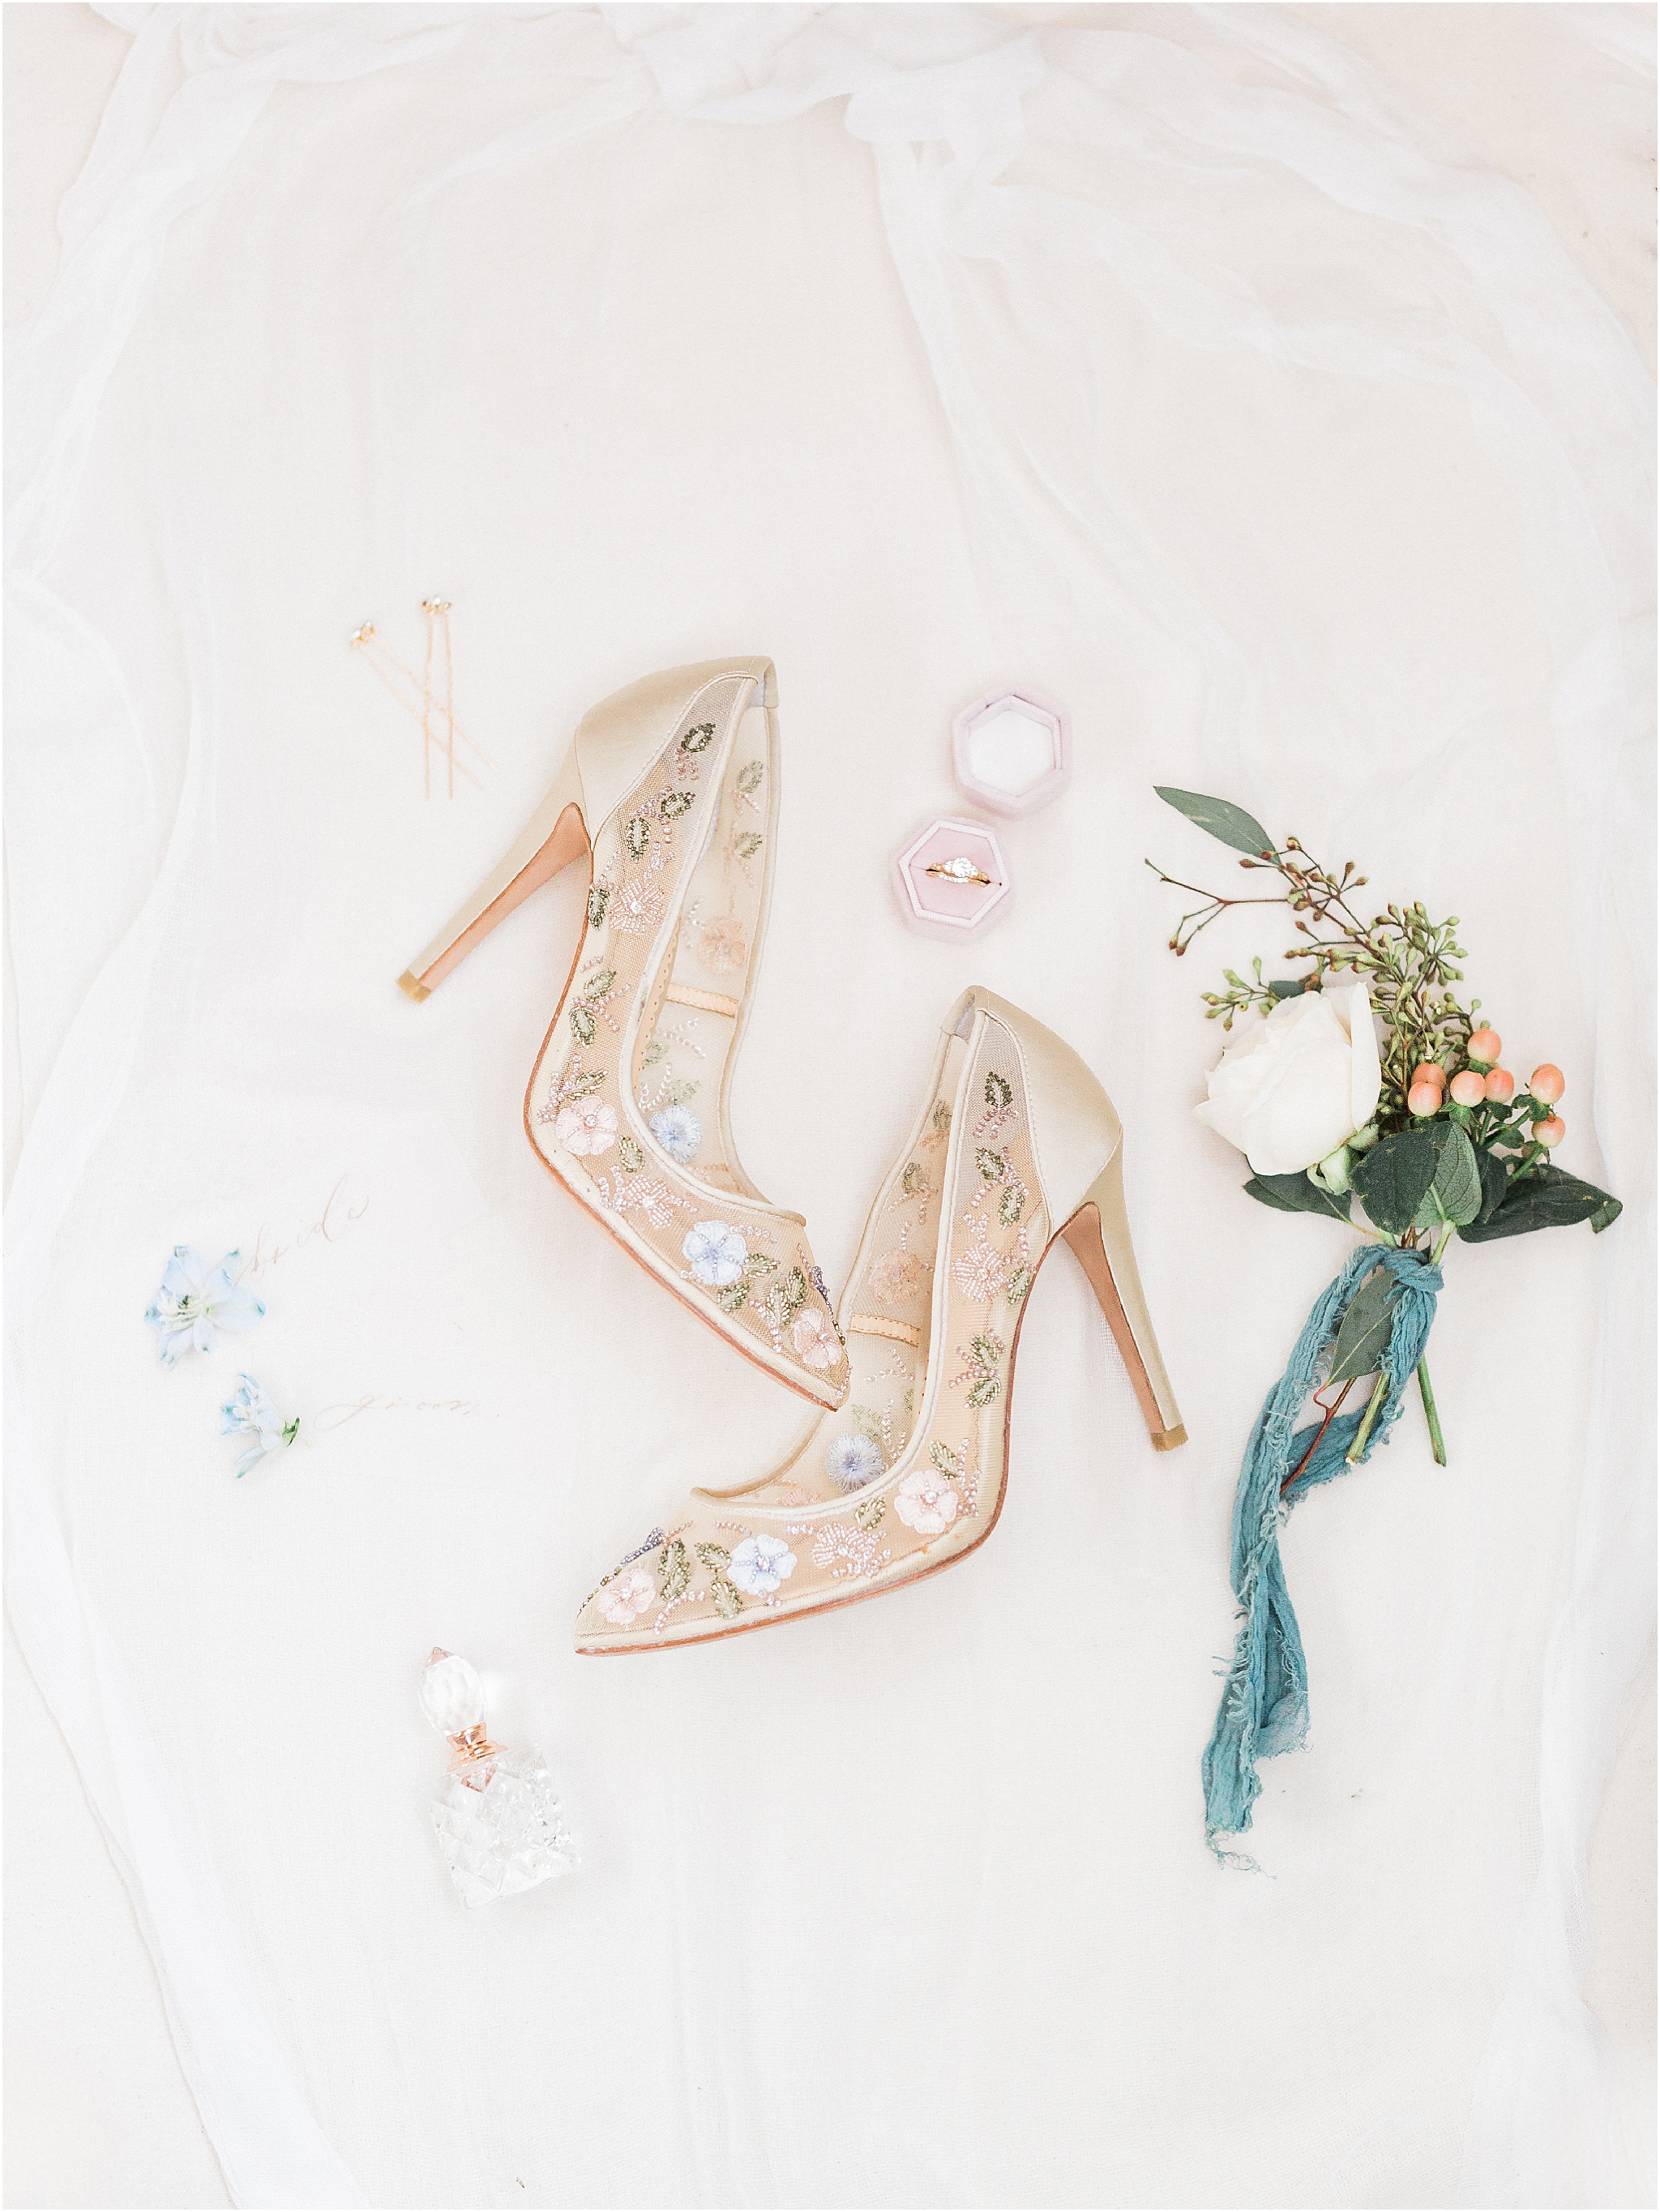 Bella Belle shoes with floral details